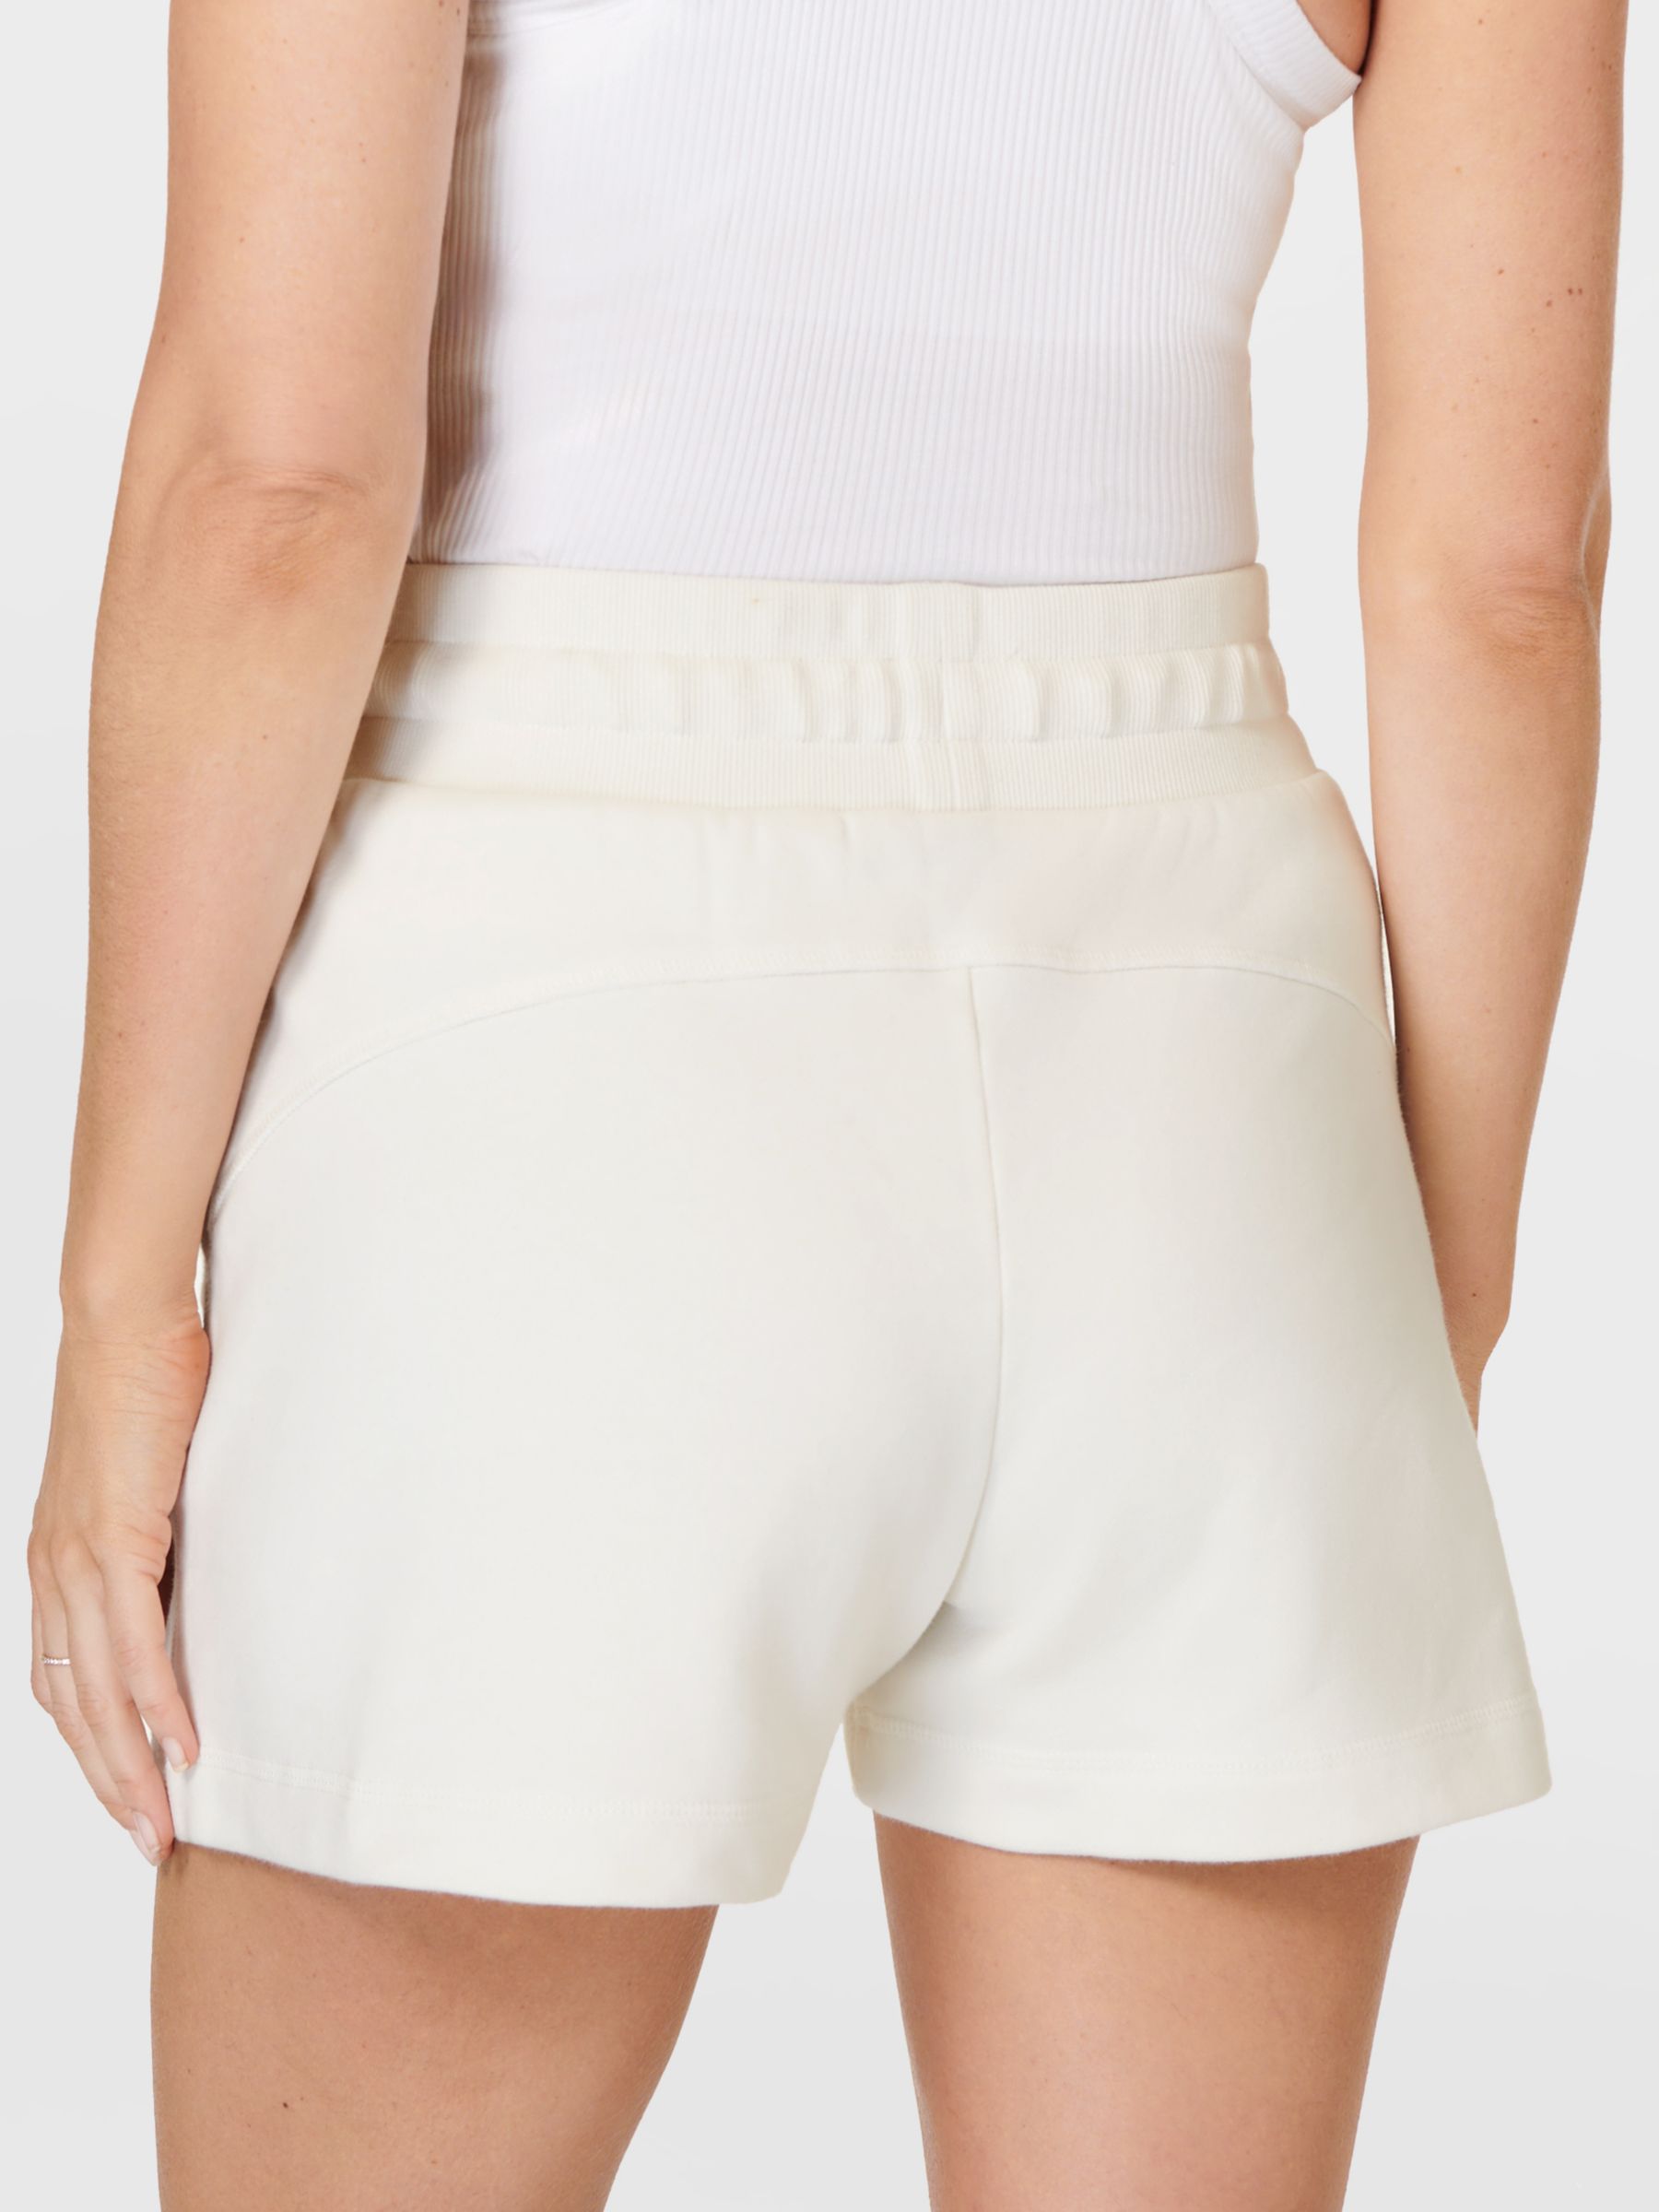 Sweaty Betty Revive High Waist Shorts, Lily White, XXS